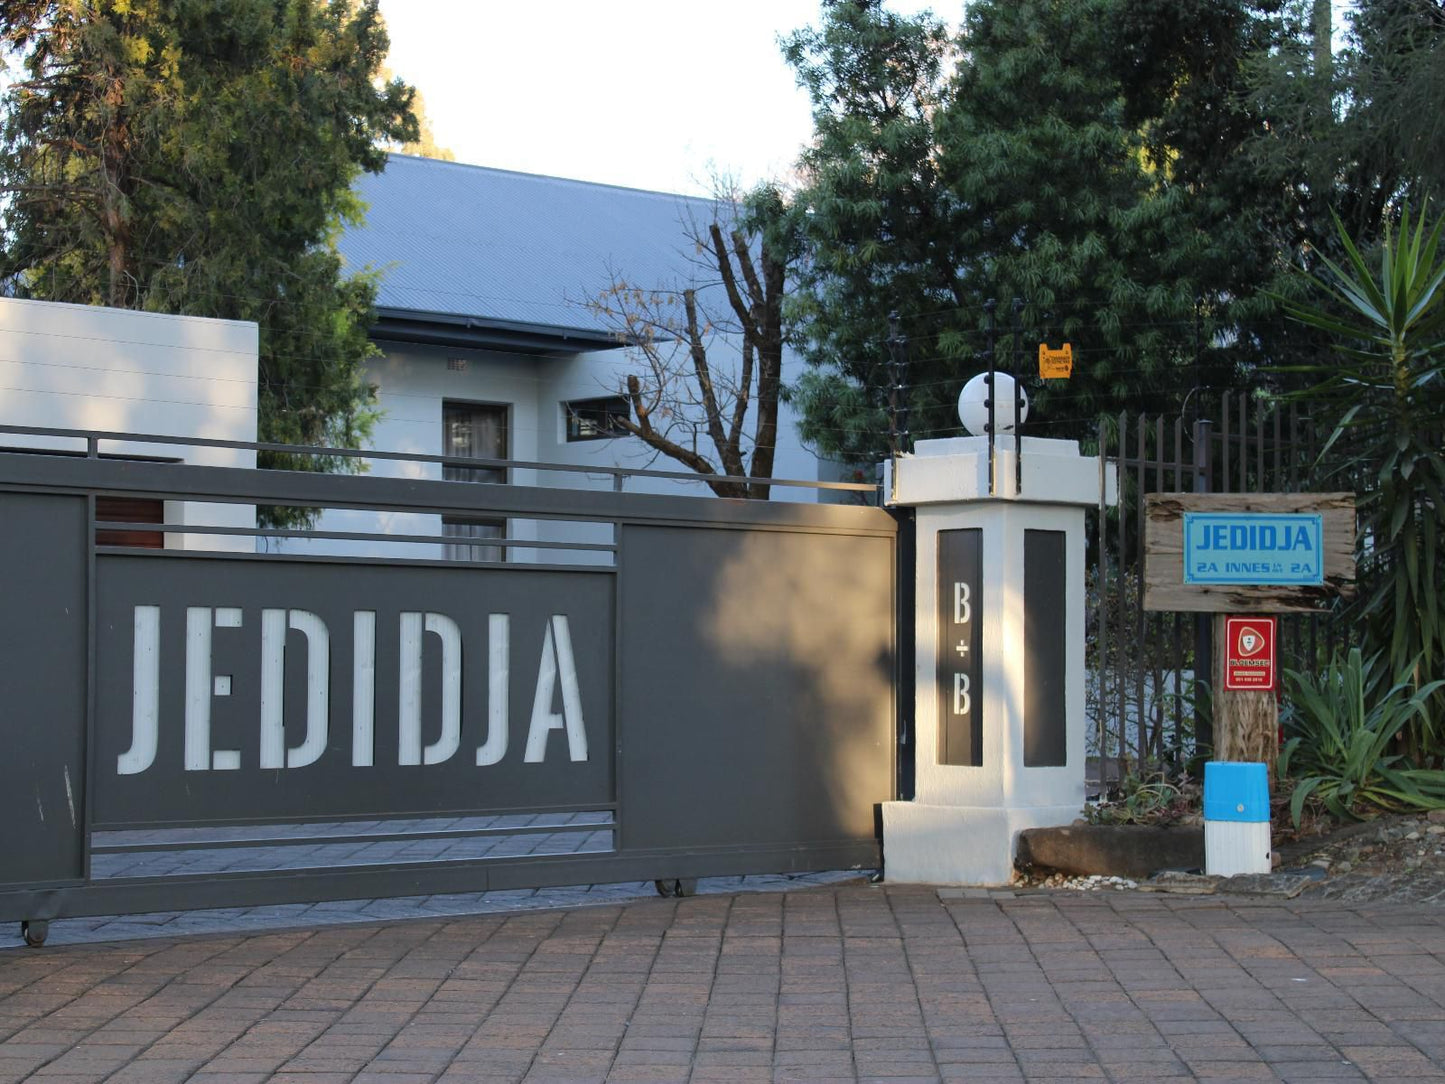 Jedidja Bed And Breakfast Waverley Bloemfontein Free State South Africa Sign